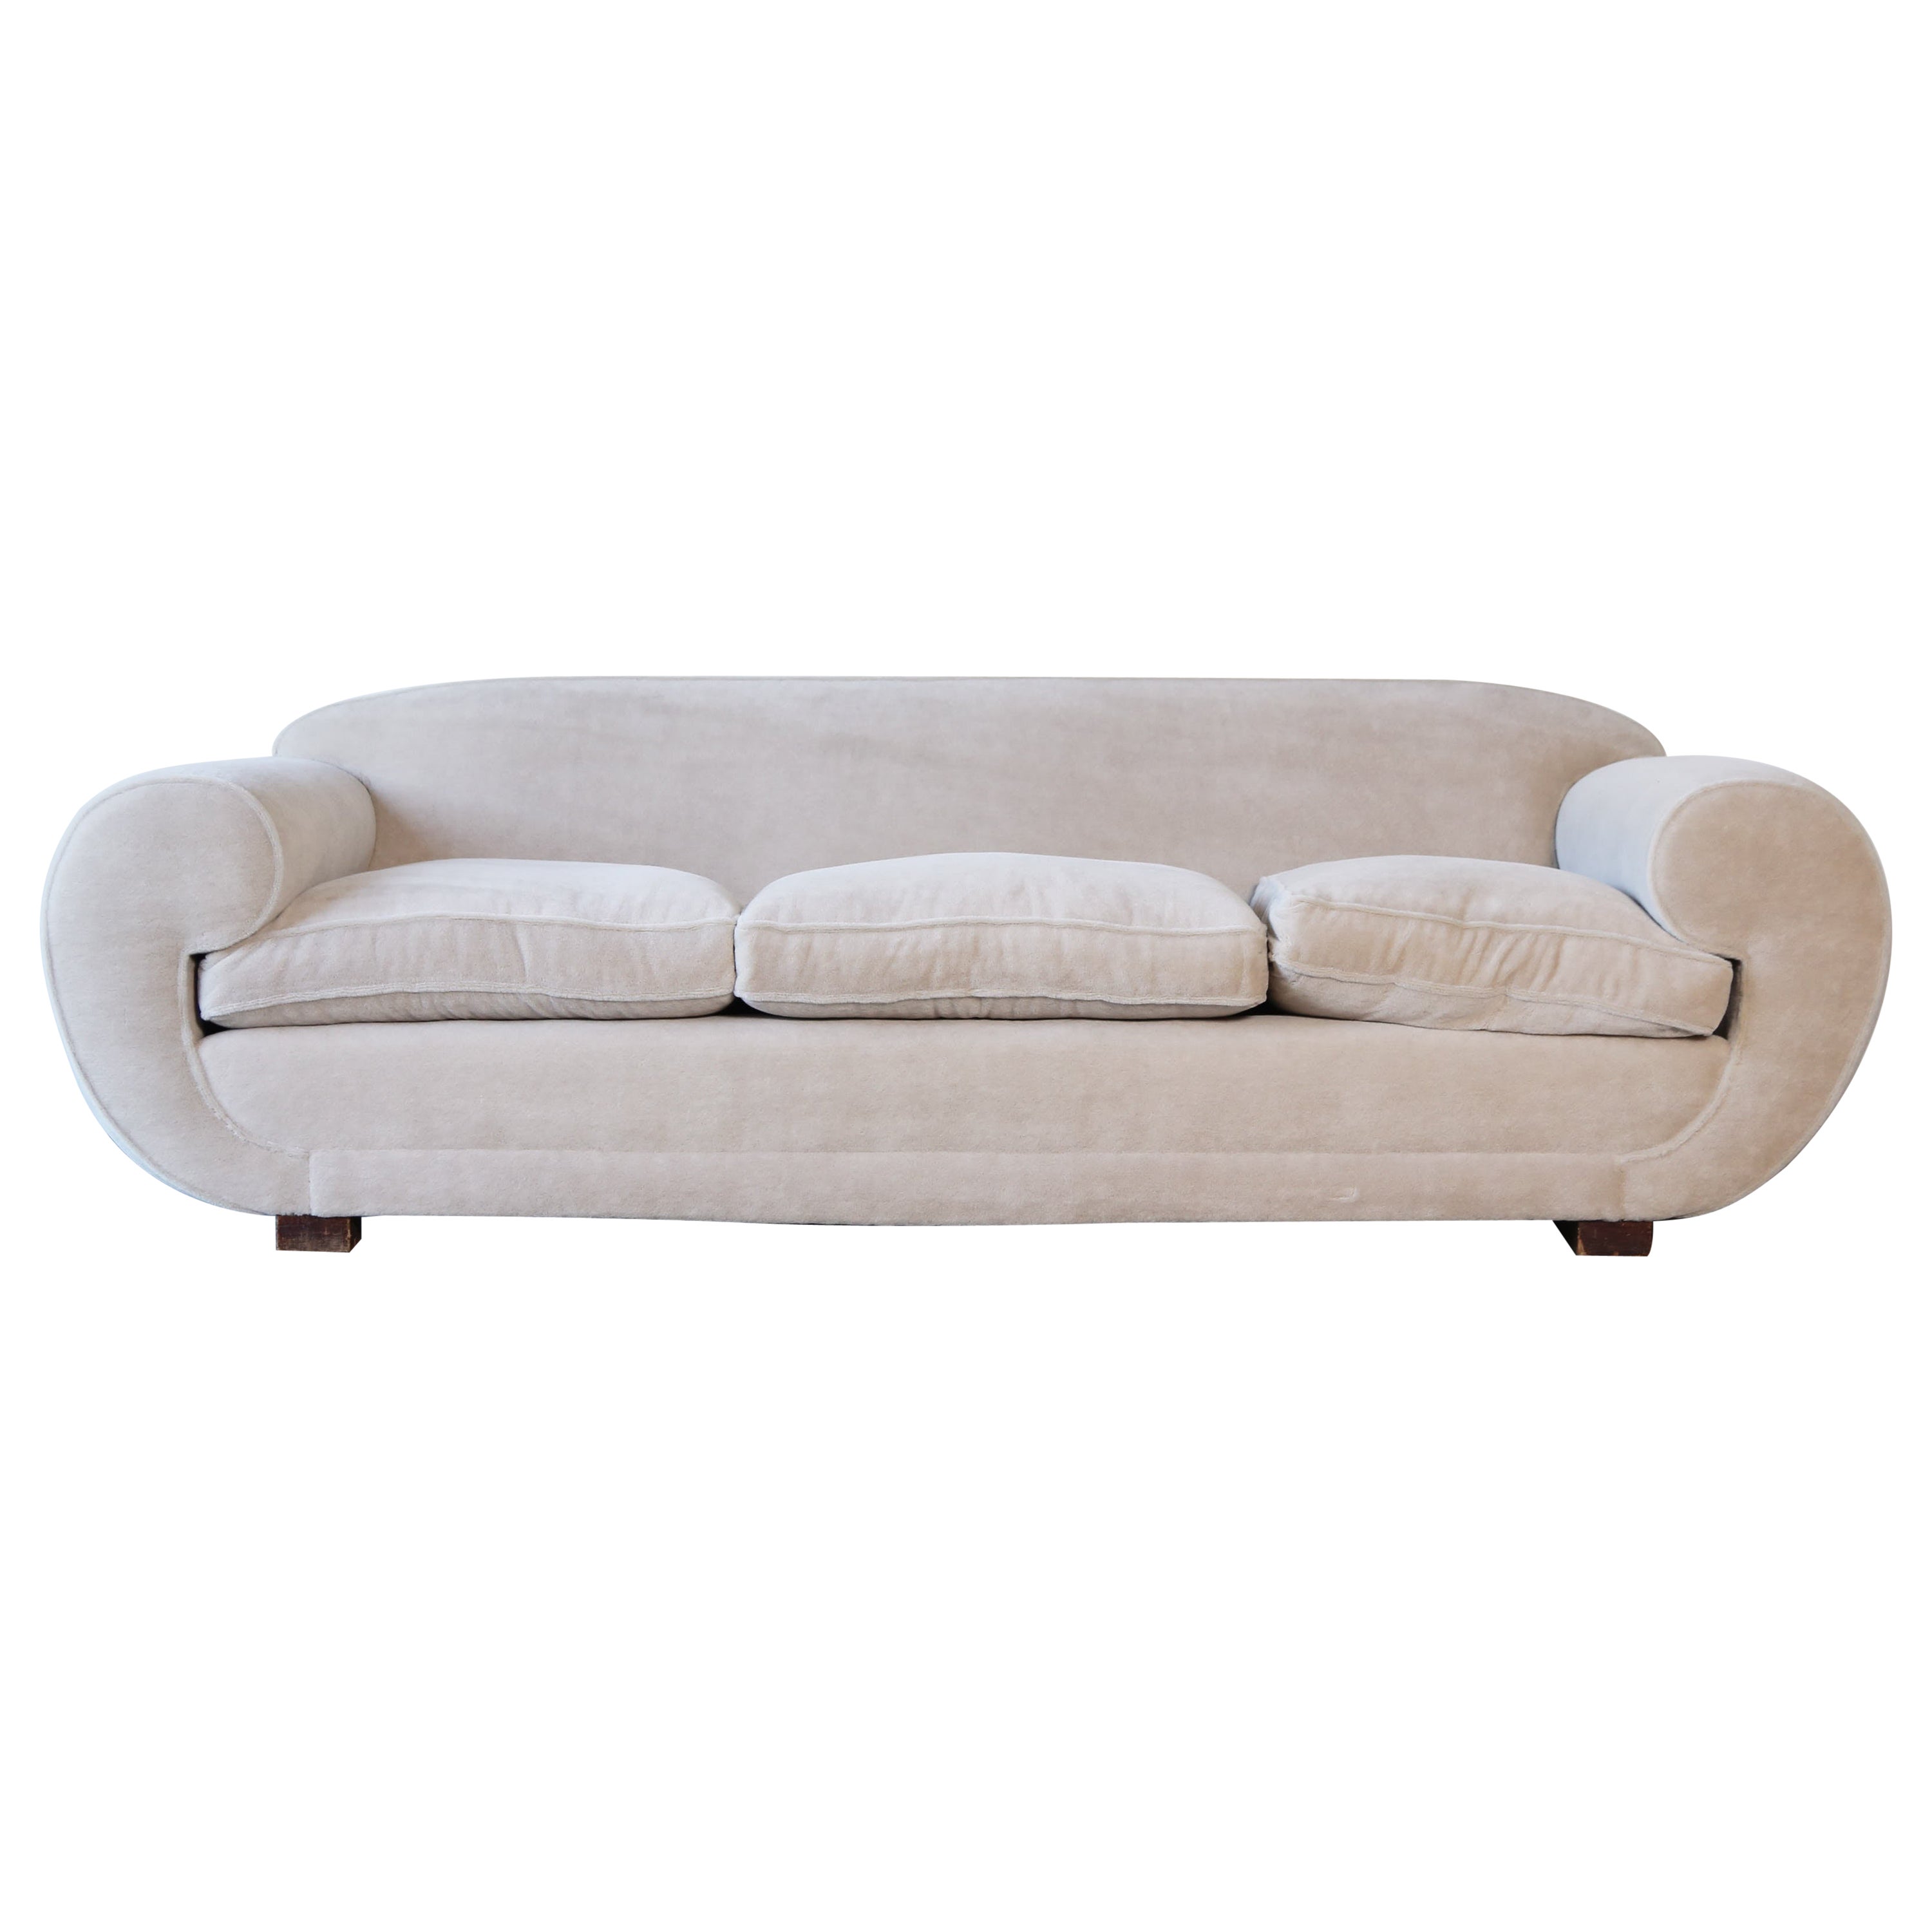 Elegant Art Deco Sofa, France, 1940s, Upholstered in Pure Alpaca